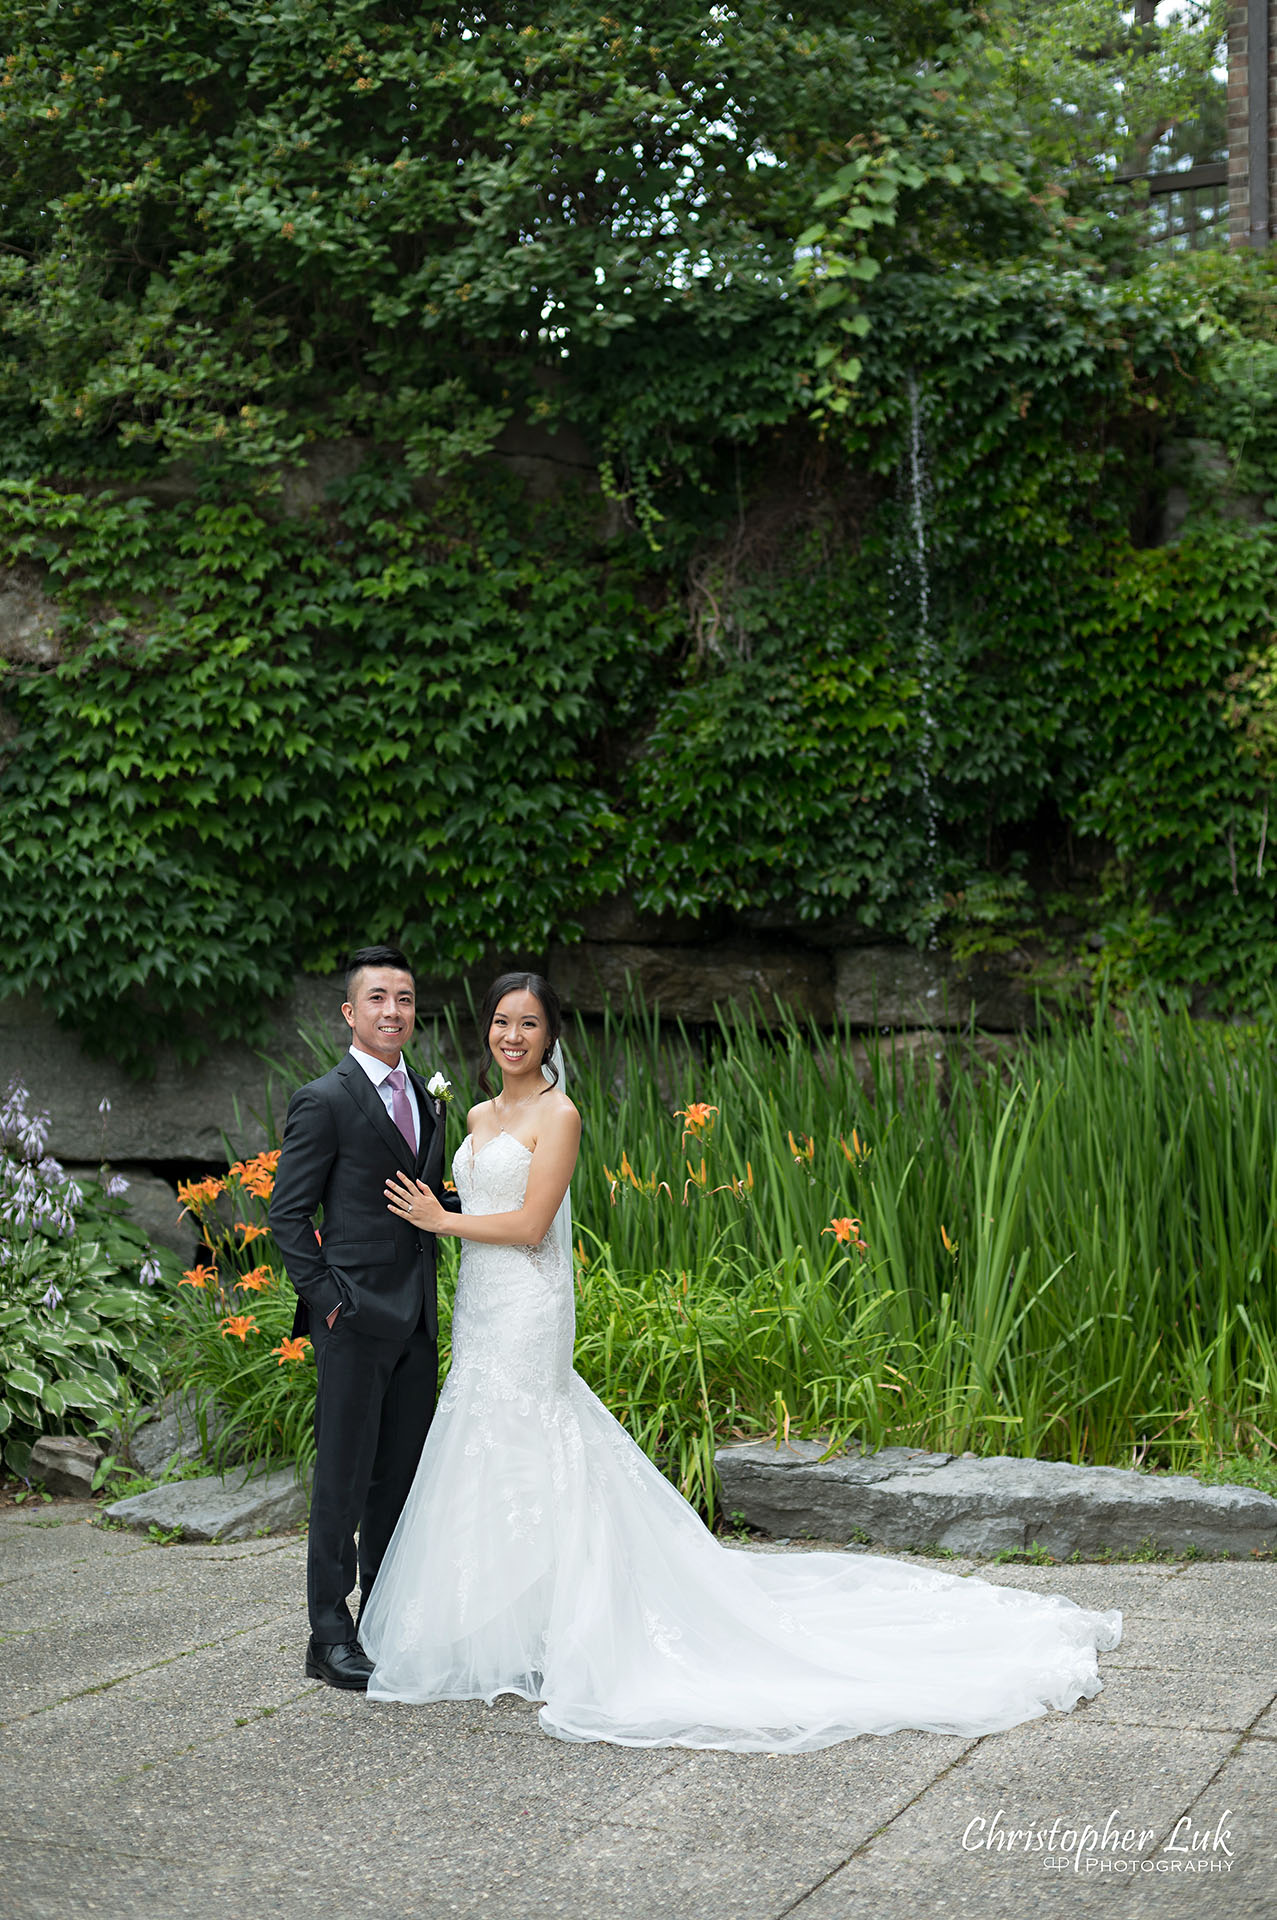 Toronto Wedding Photography Candid Natural Photojournalistic Organic Bride Groom Portrait Smiling